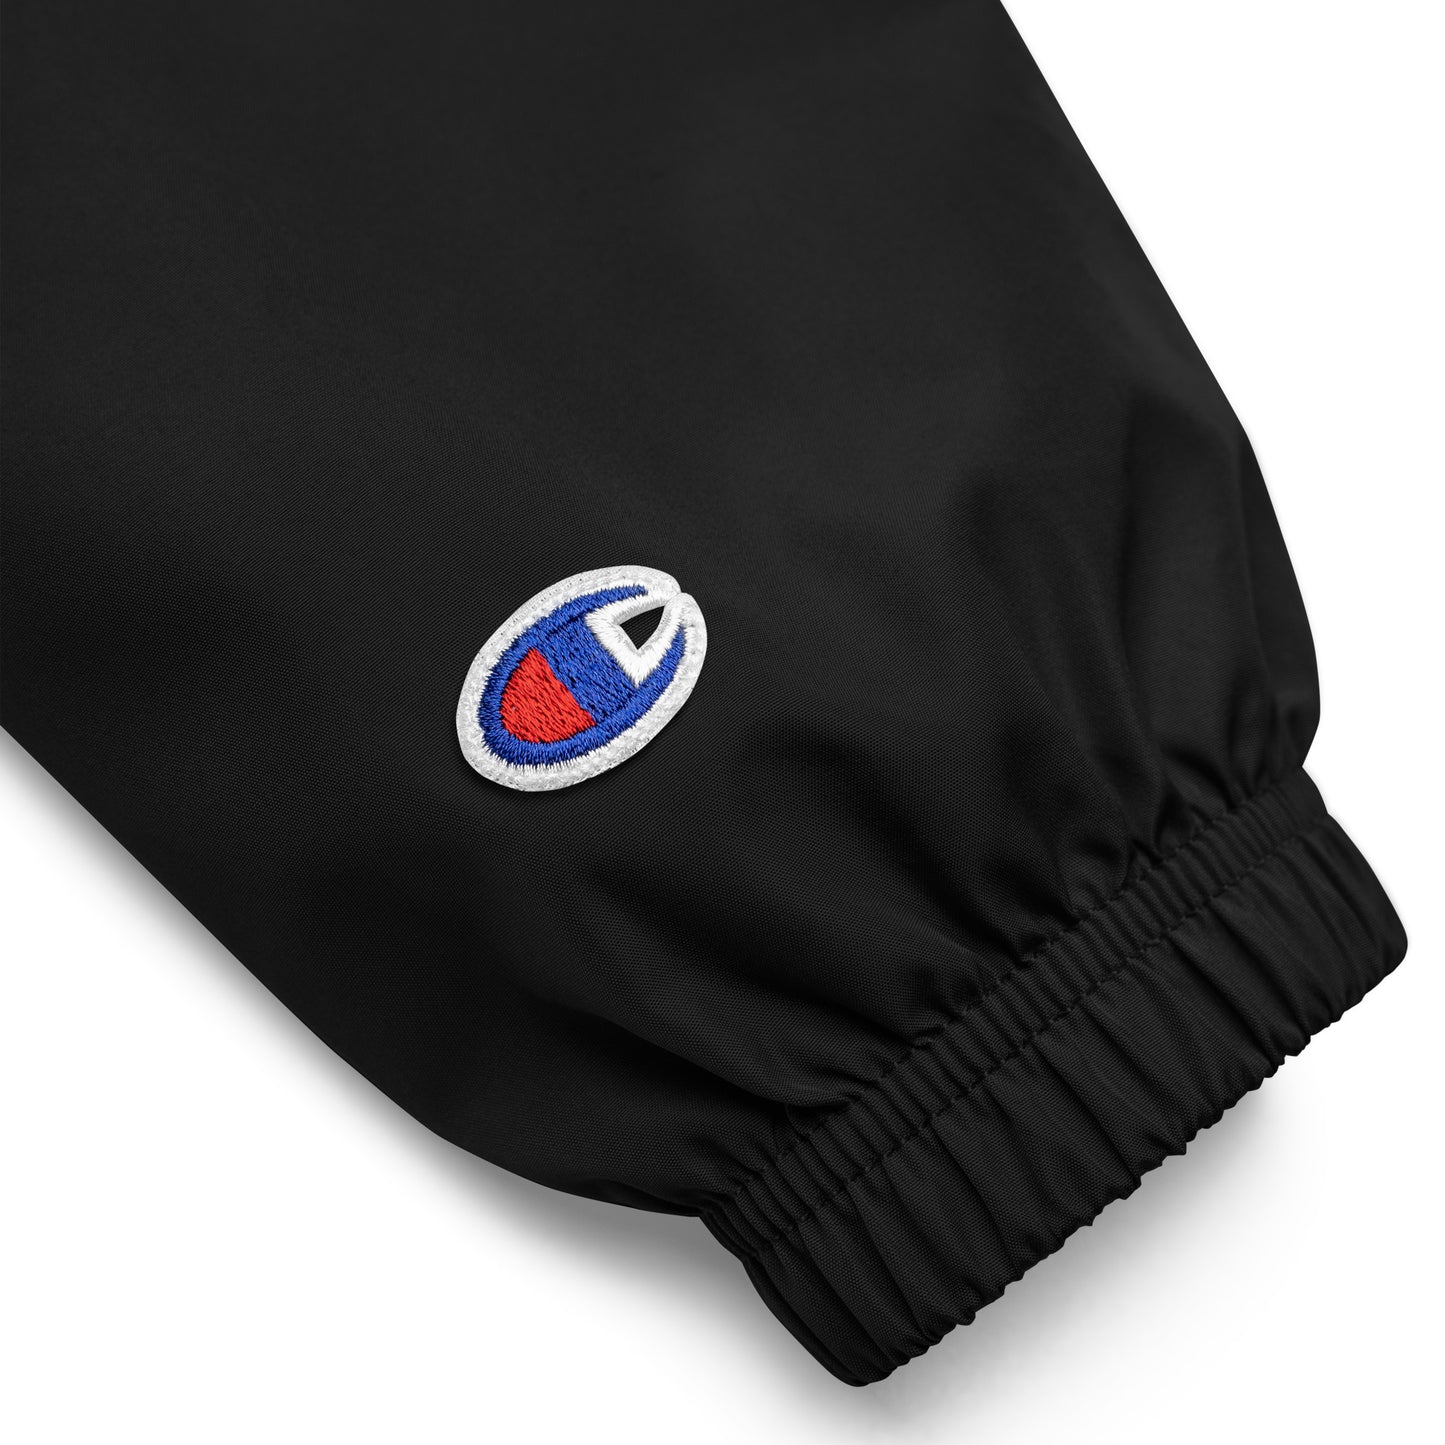 Embroidered Packable Jacket - Wash Rack Pullover Jacket - Livestock Show Charolais Heifer